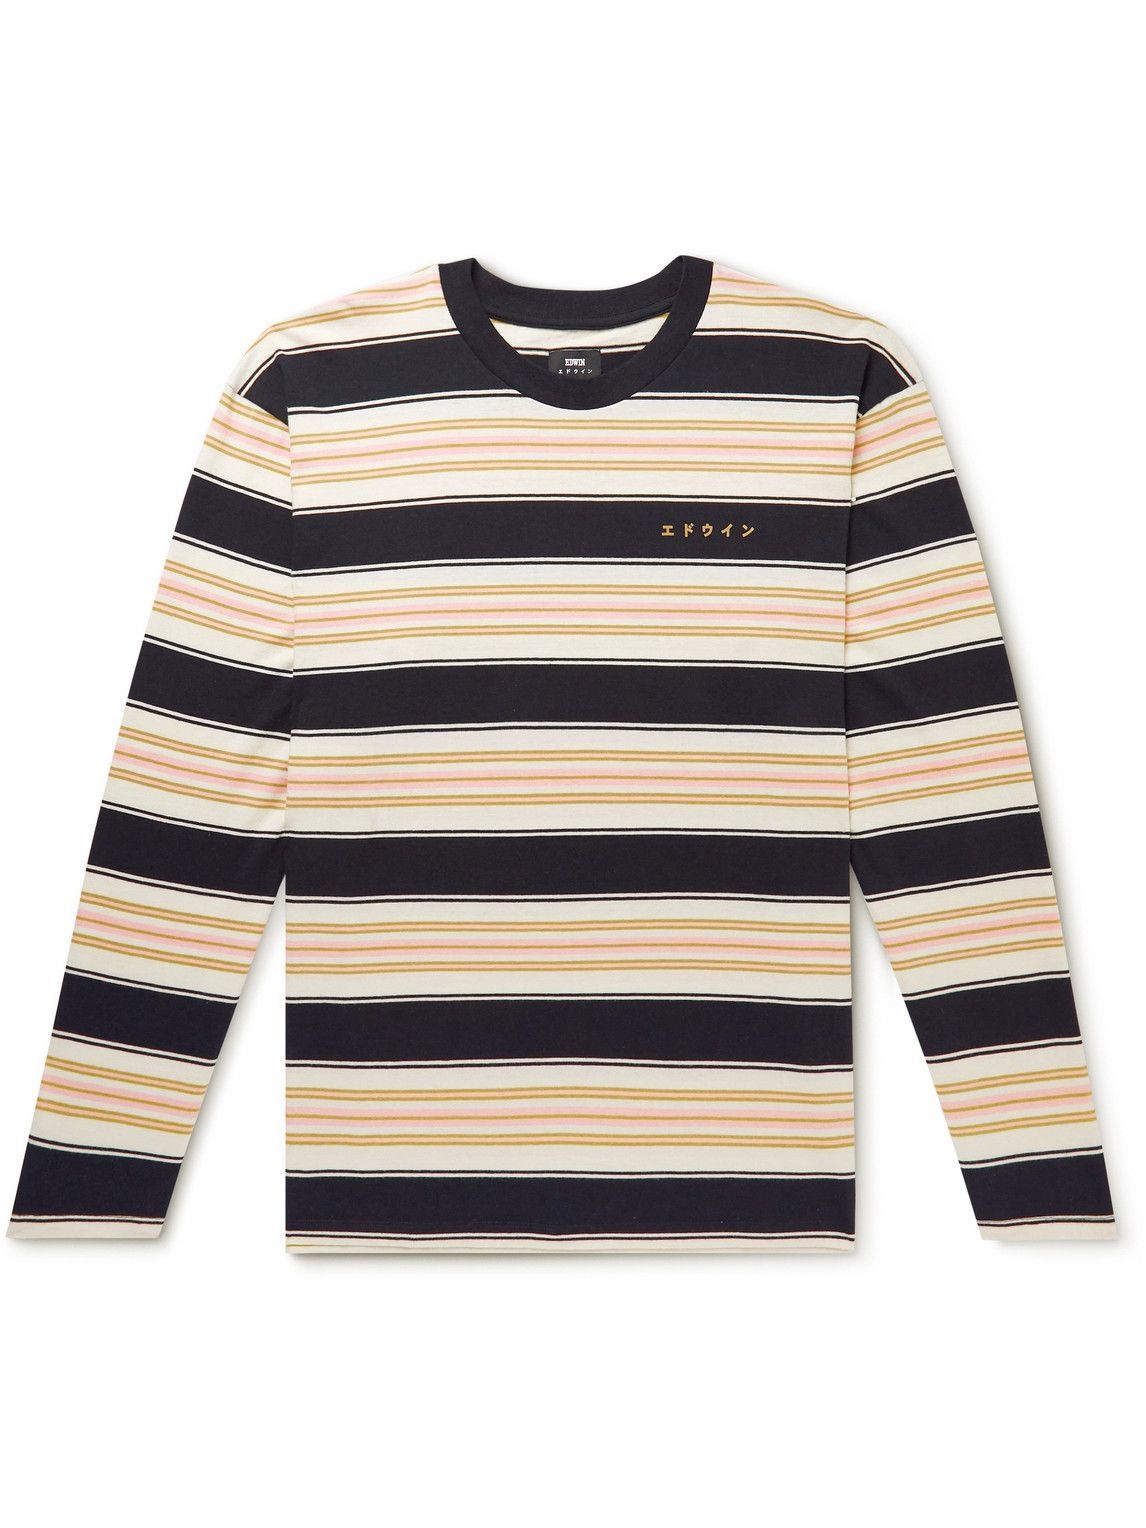 Photo: EDWIN - Printed Striped Cotton-Jersey T-Shirt - Black